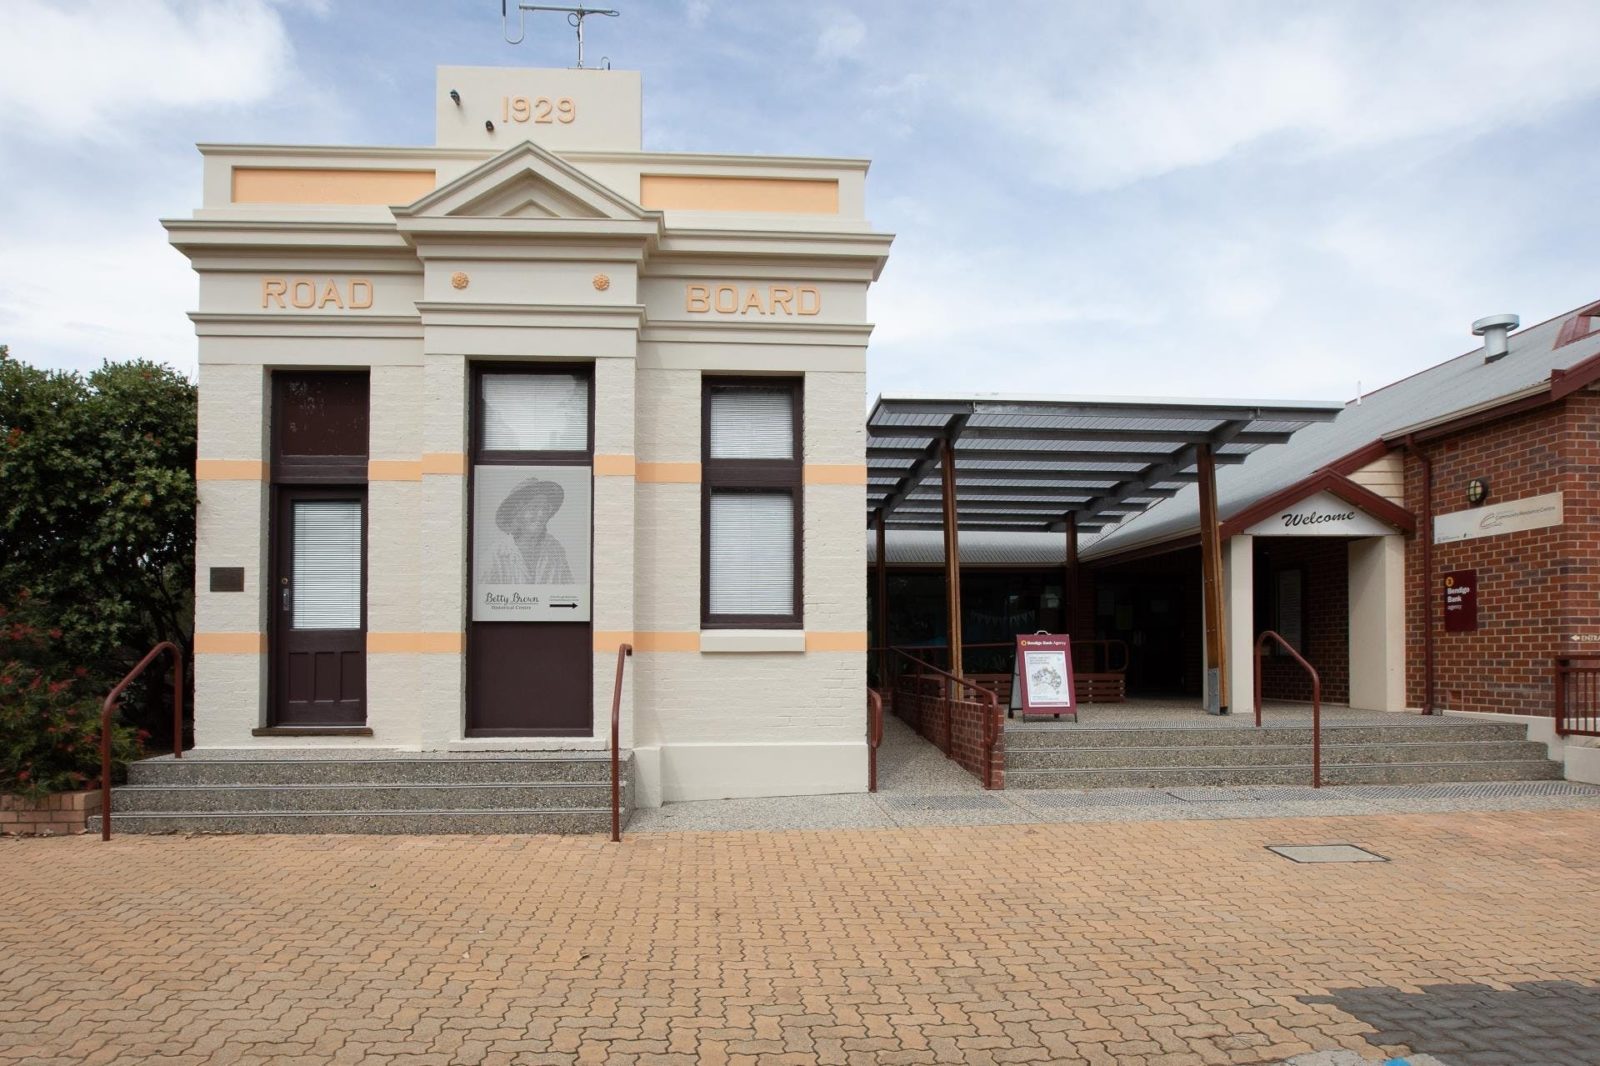 Betty Brown Historical Centre, Darkan, Western Australia